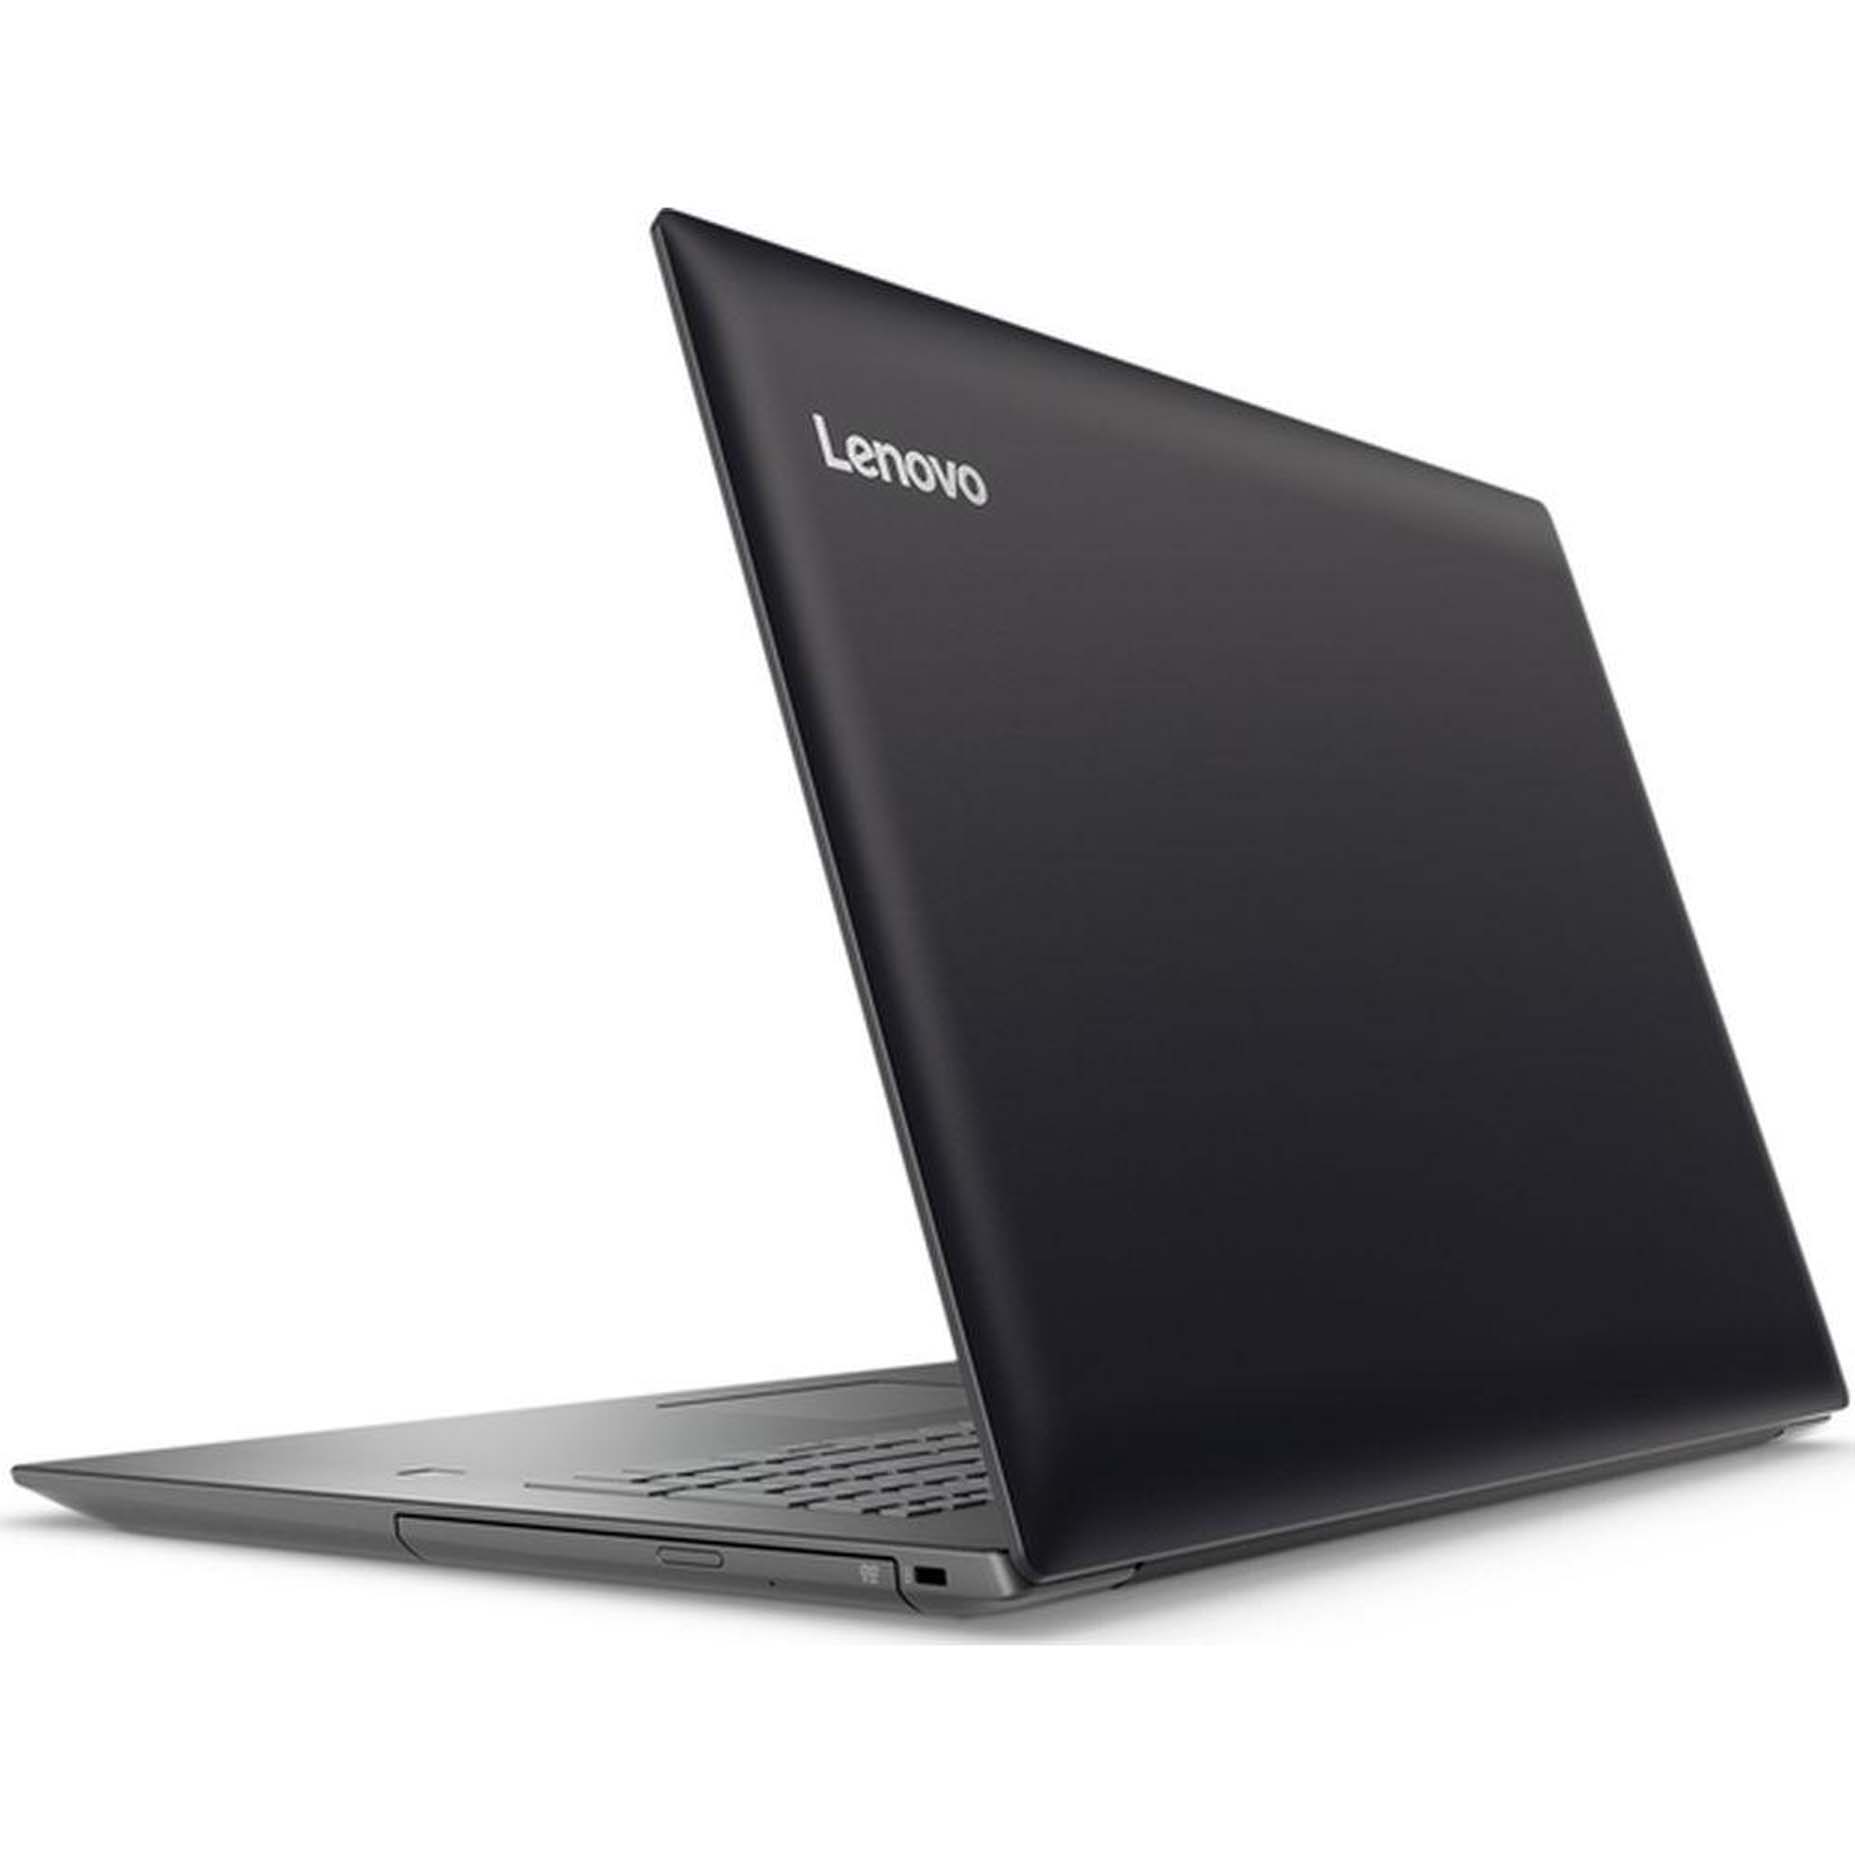 Harga Lenovo Ideapad IP330-14IGM 1QID Laptop Celeron N4000 4GB 500GB Integrated 14 Inch Windows 10 Black